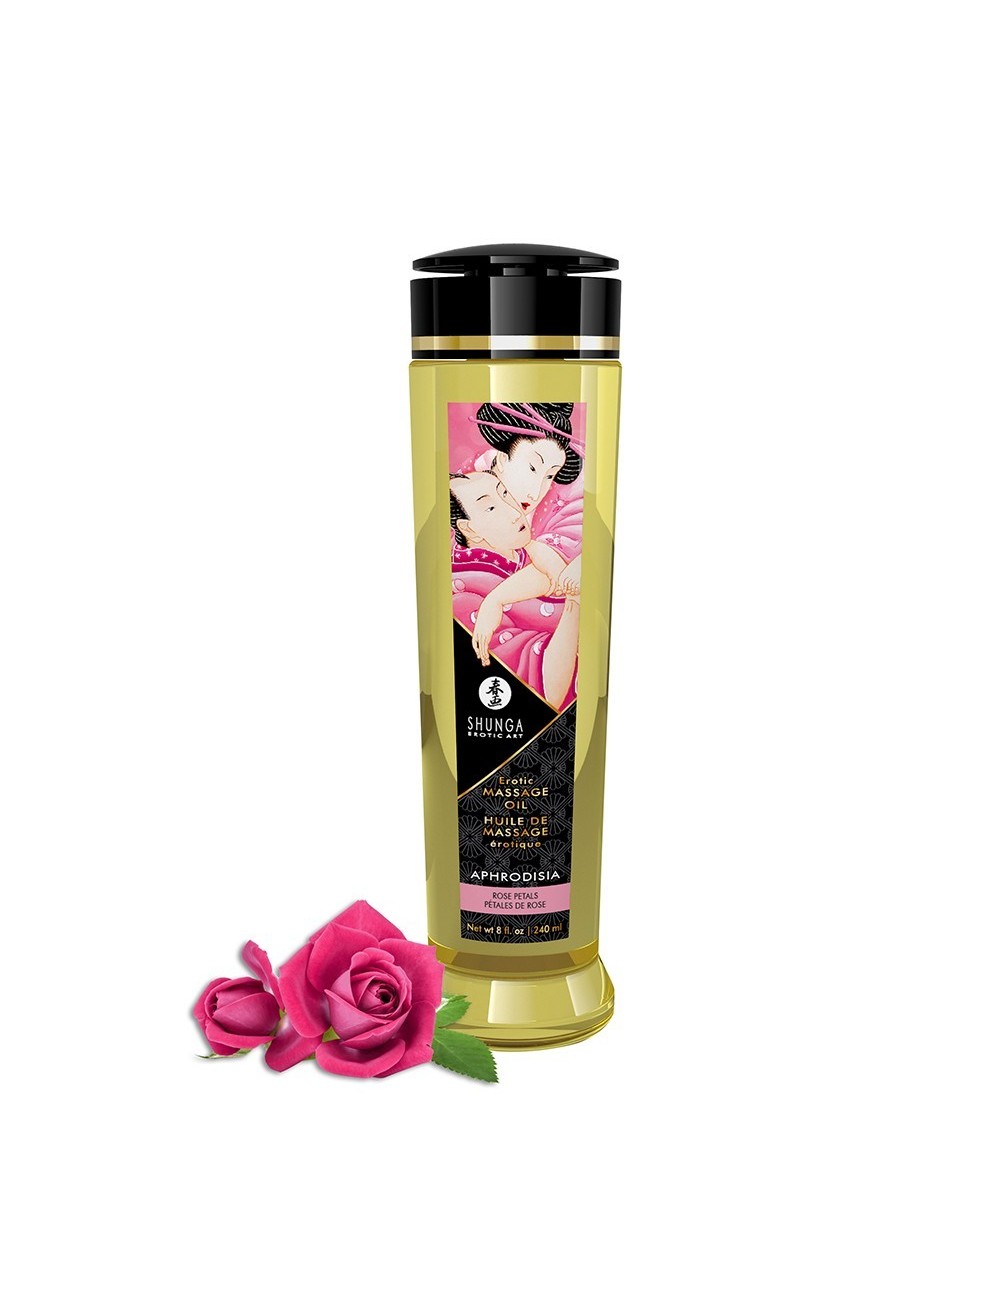 Huile de massage aphrodisiaque à la rose 240ml - CC1200 - Huiles de massage - Shunga